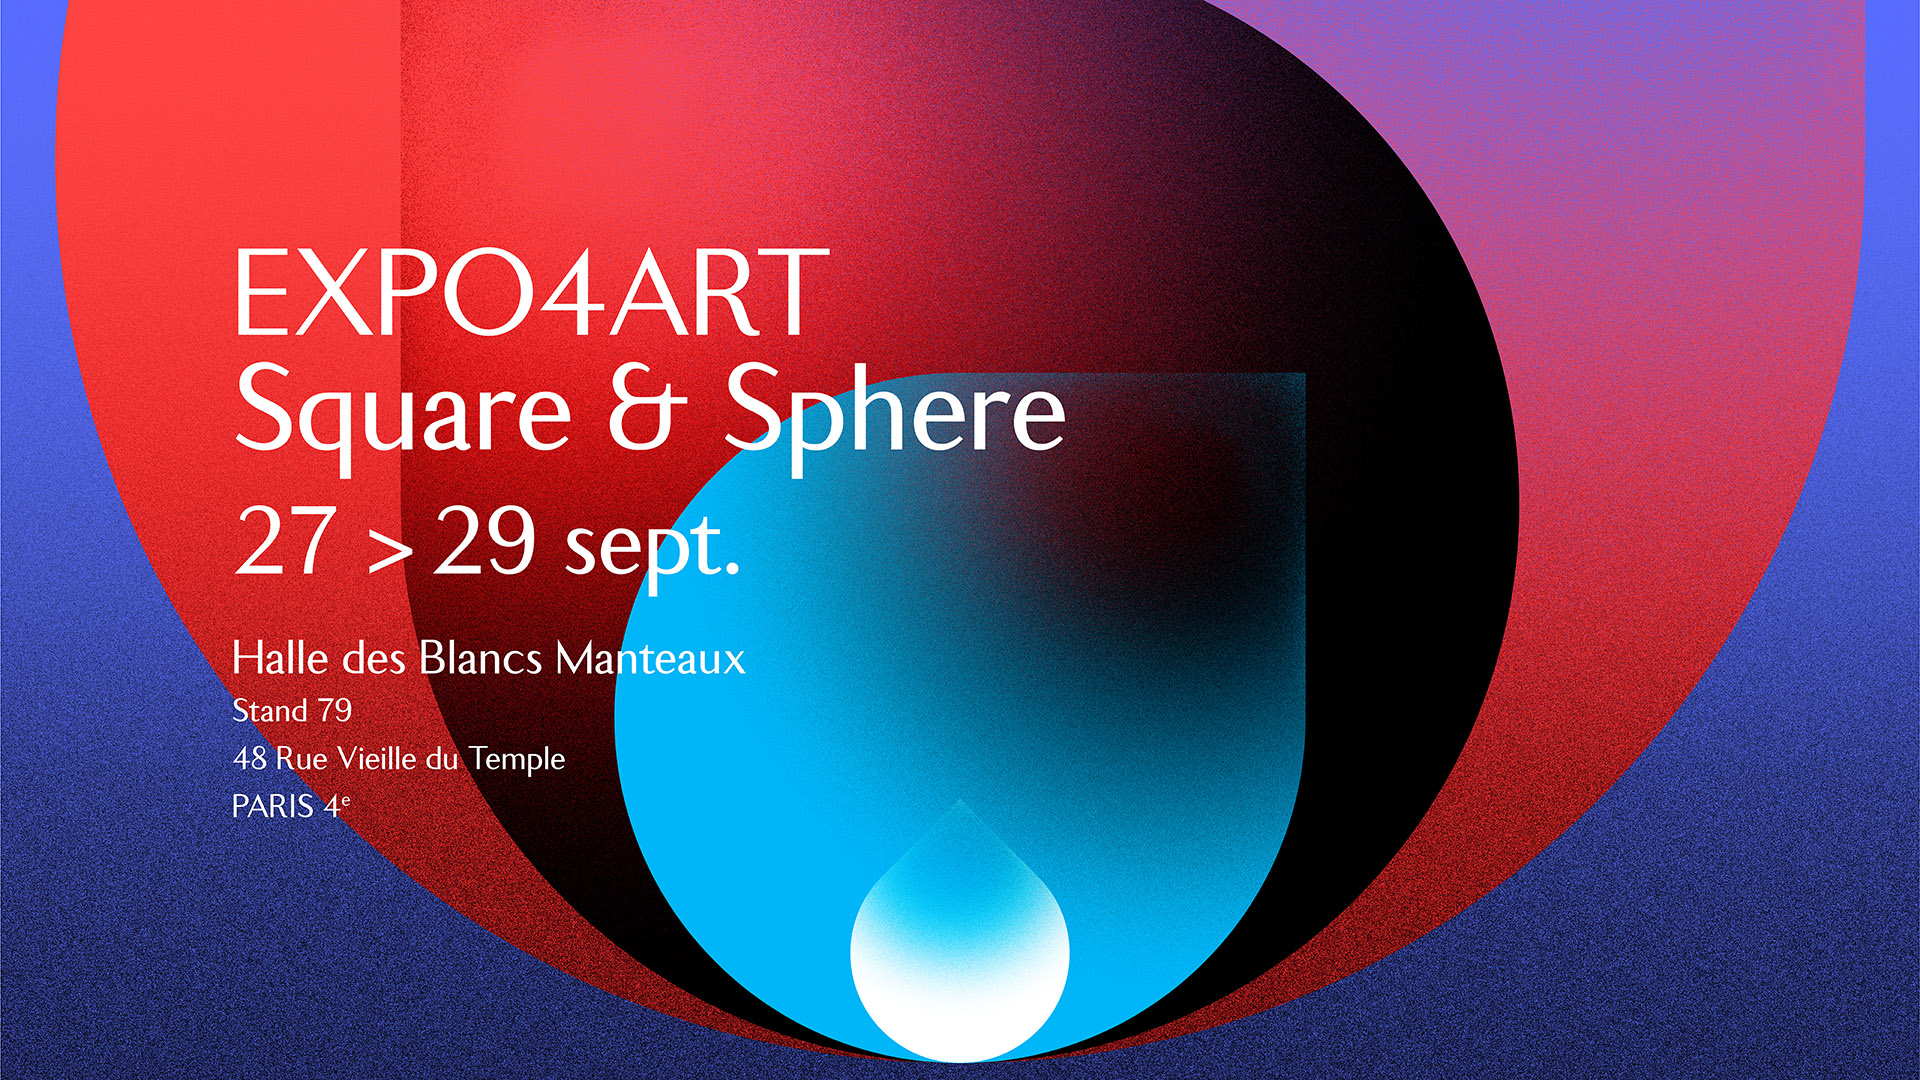 Square & Sphere – Expo4art